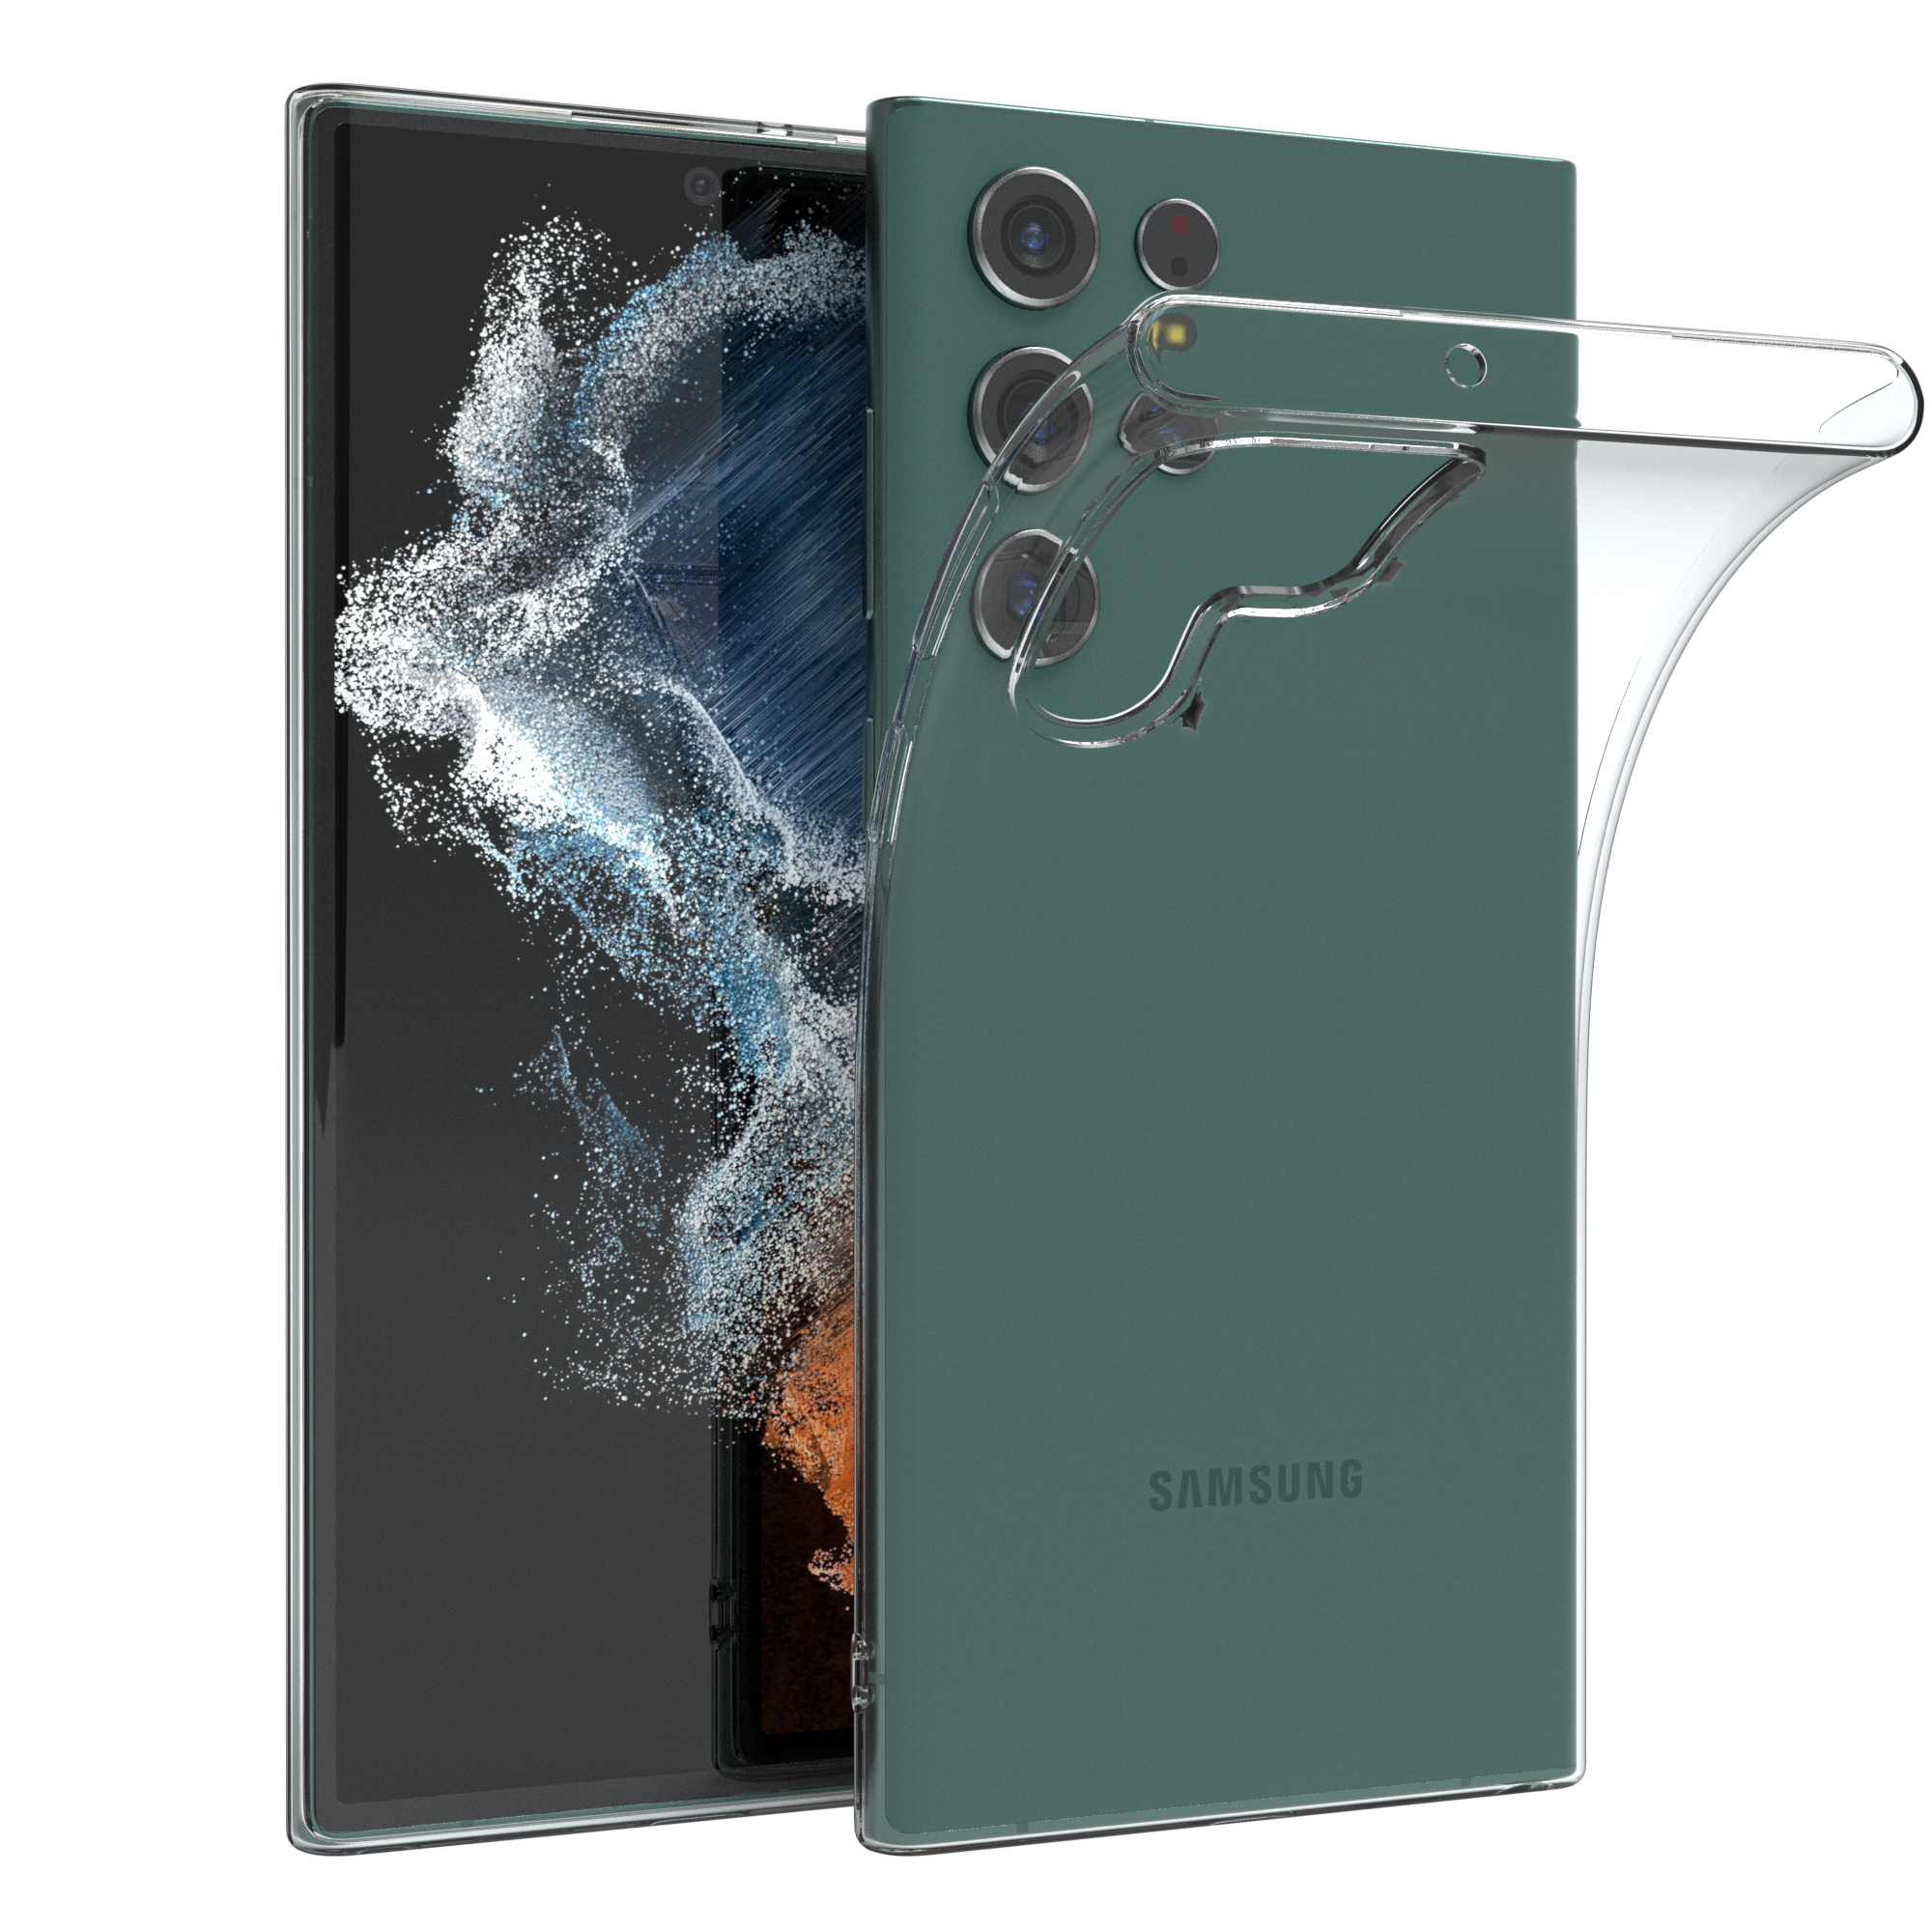 5G, Samsung, Ultra Backcover, S22 Slimcover CASE Durchsichtig Galaxy Clear, EAZY